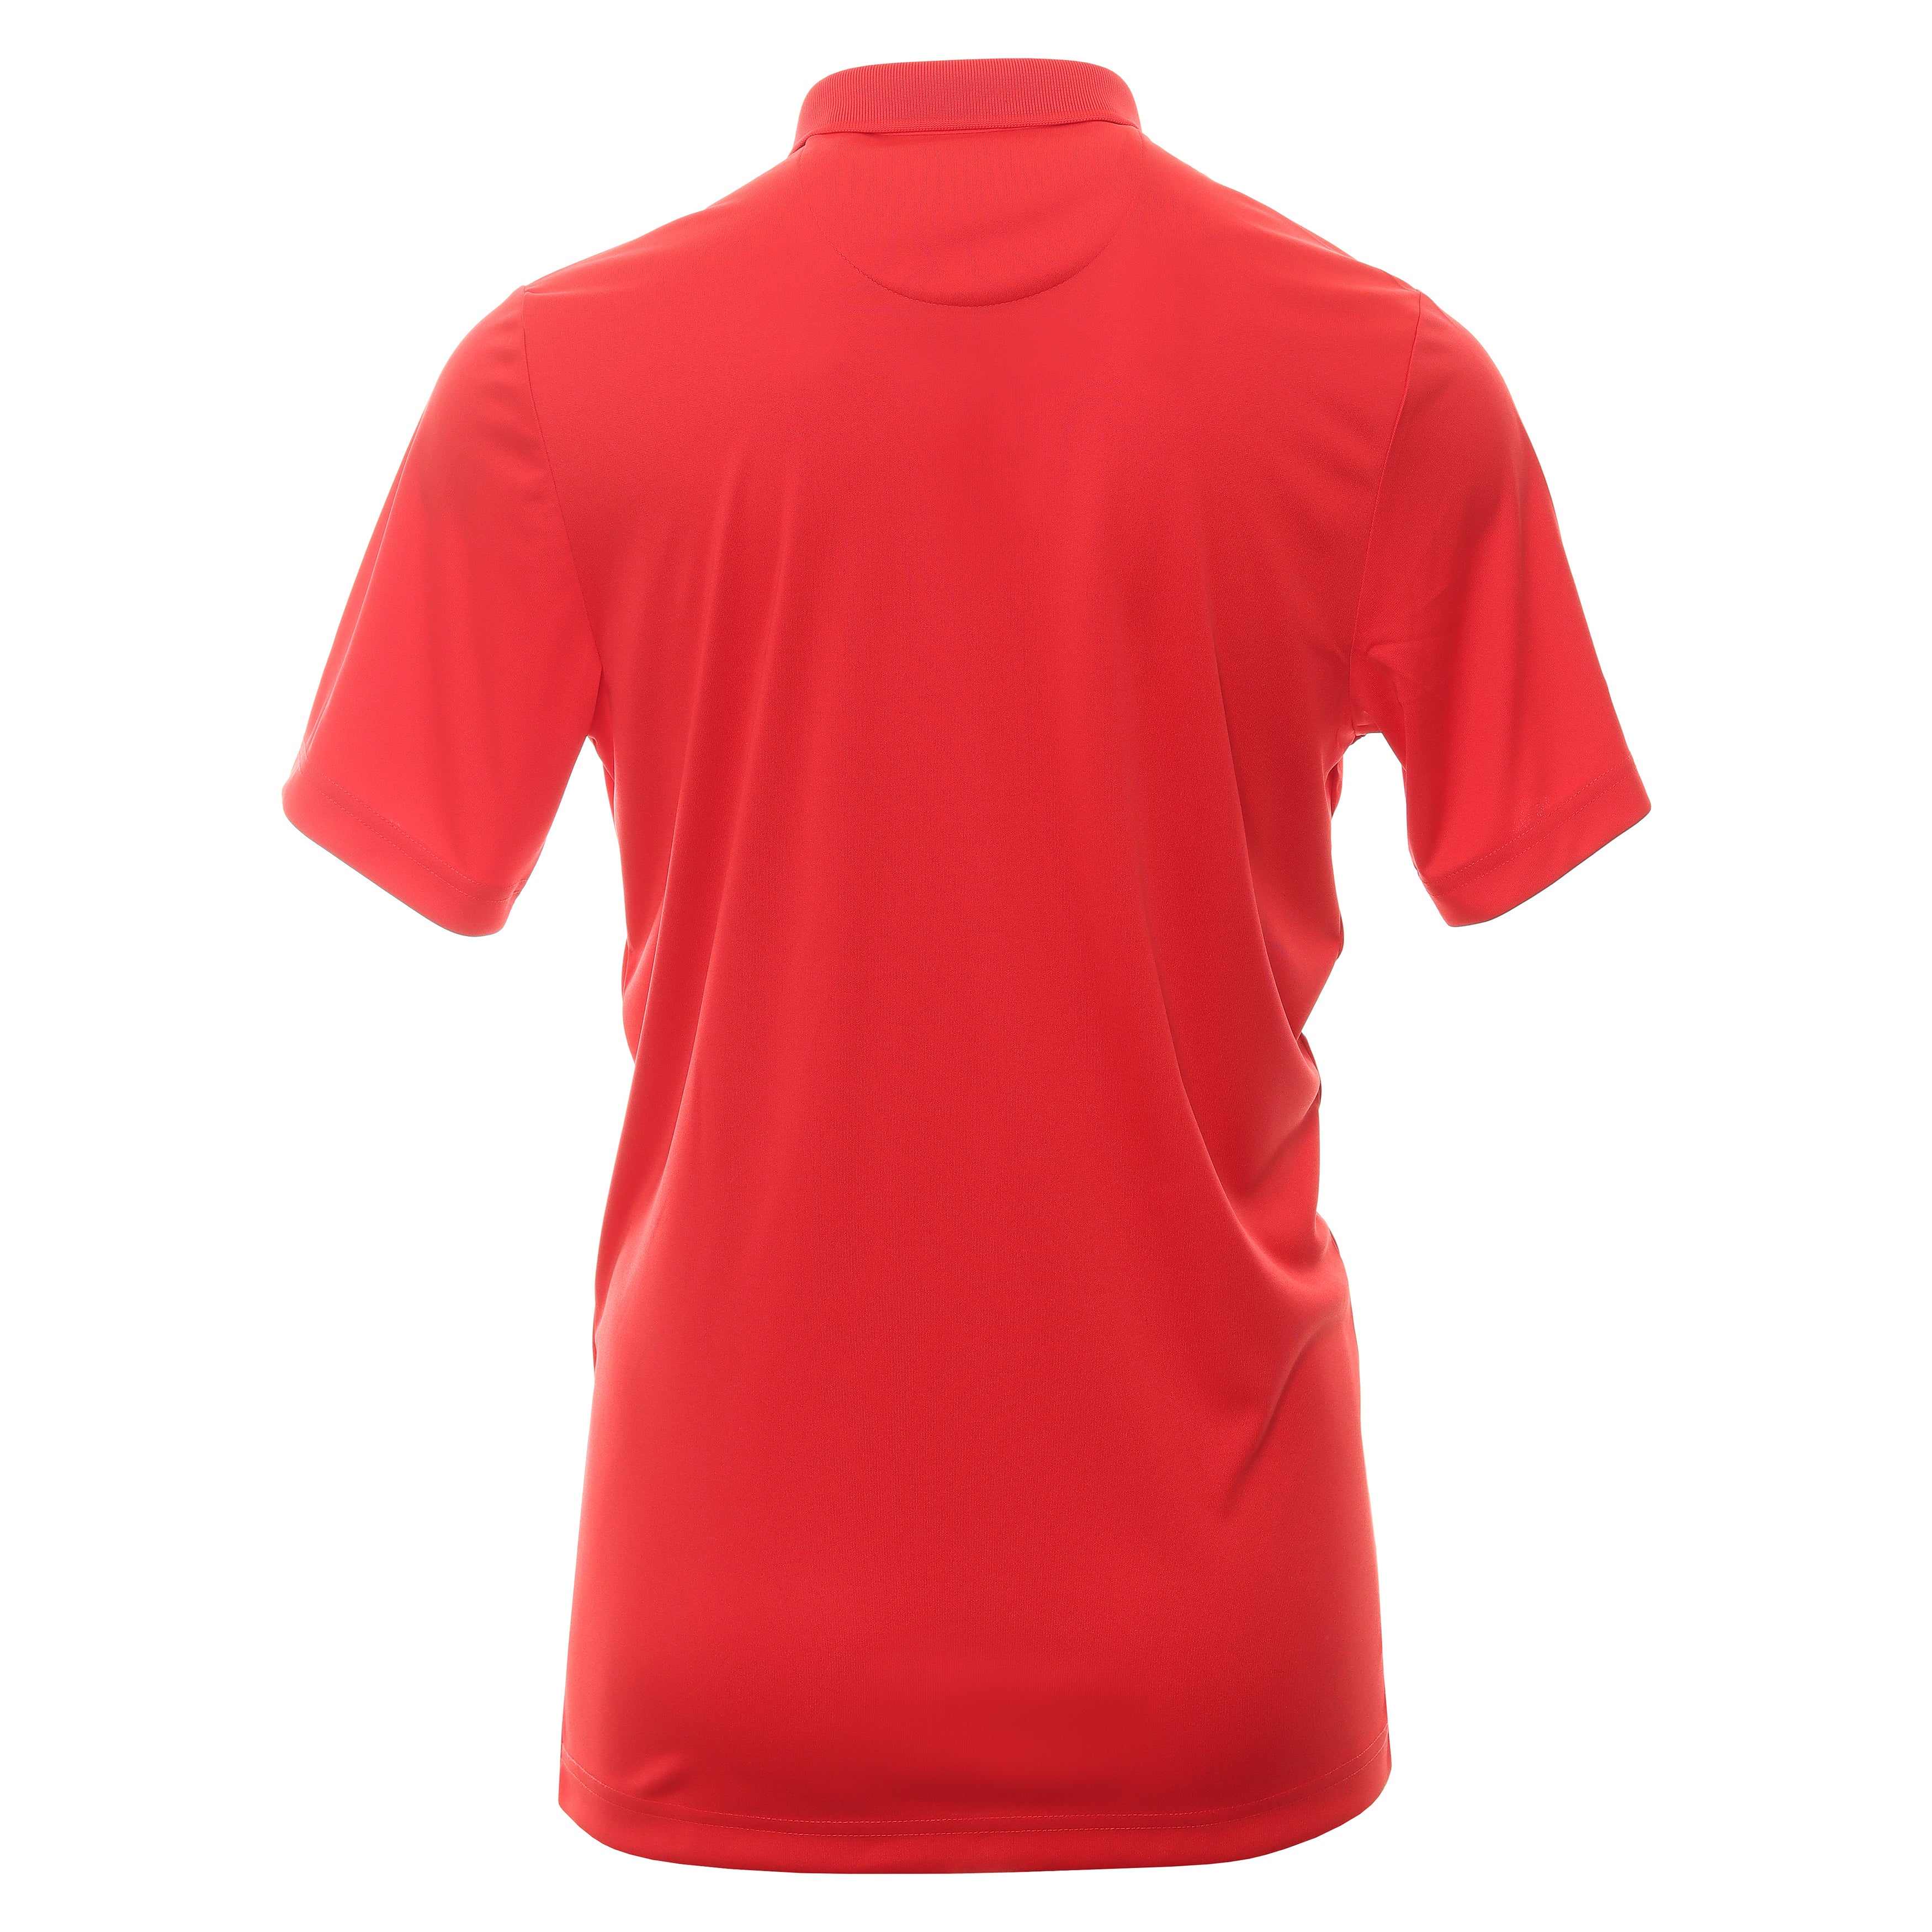 Callaway Golf Tournament Shirt CGKFB0W3 True Red 609 & Function18